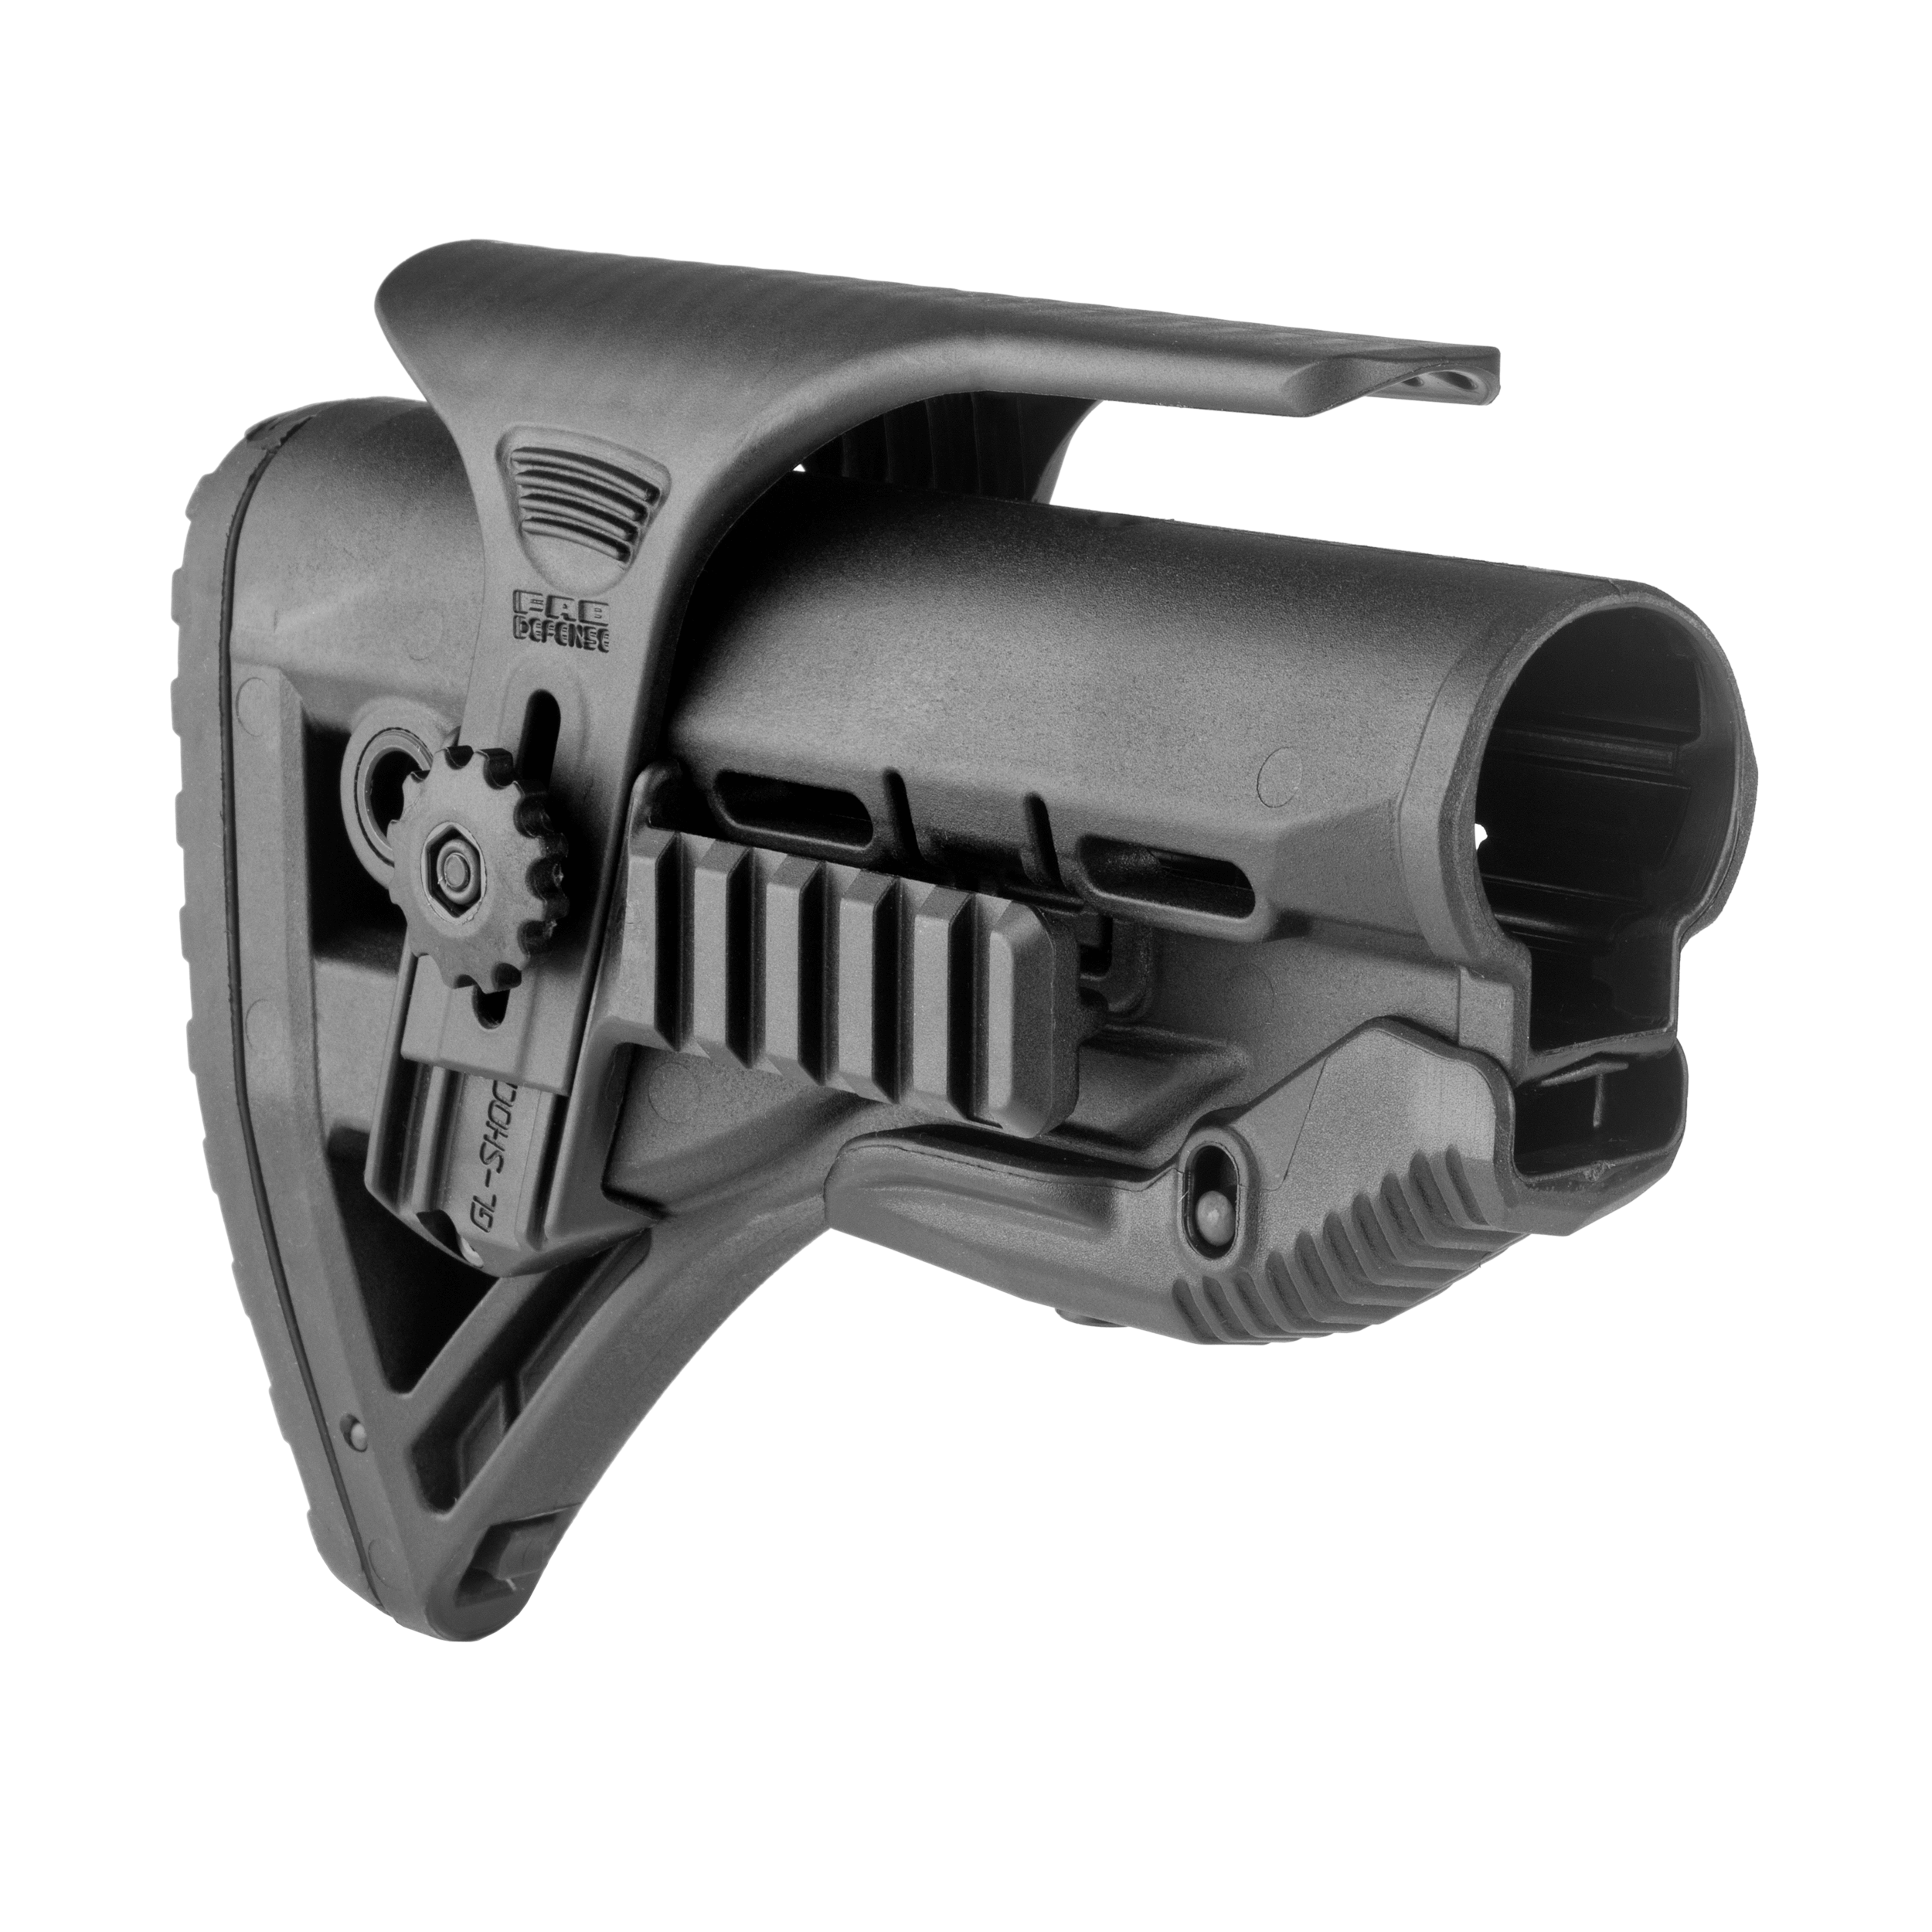 GL-Shock PCP Schulterstütze AR15 / M16 / M4 Stil - Rückstoßdämpfer / Wangenauflage / Rail